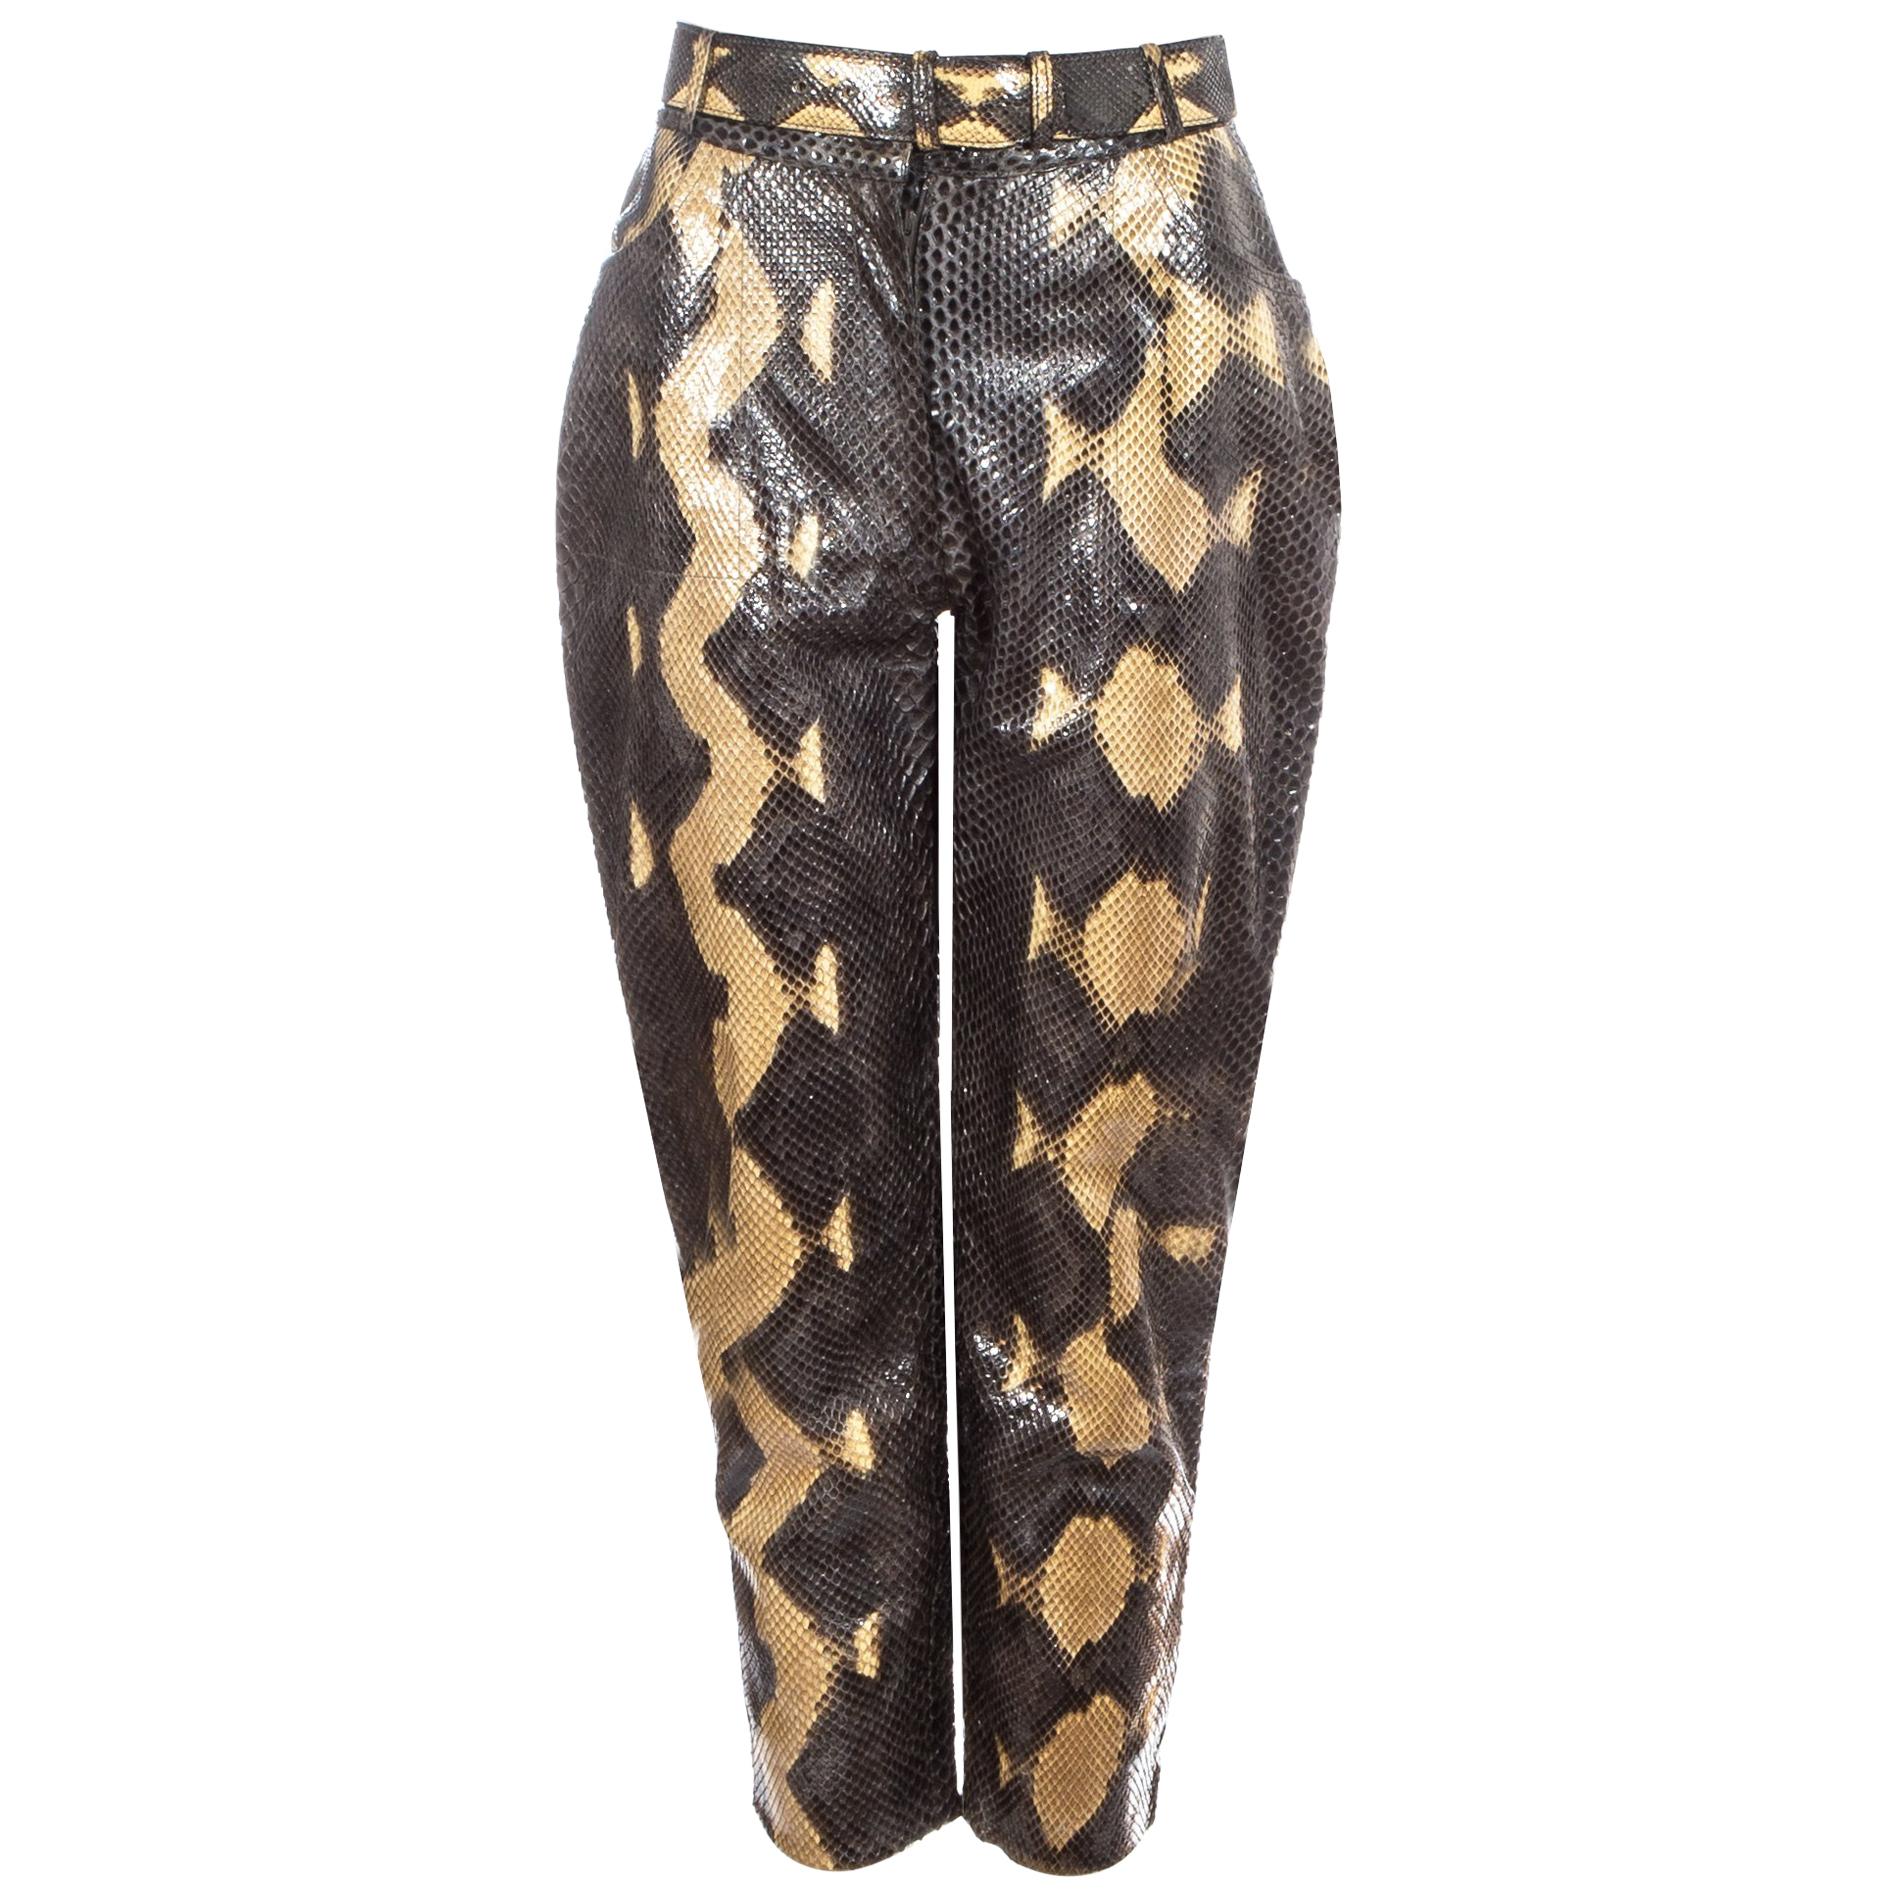 Azzedine Alaia cream snakeskin high waisted pants with matching belt, ss 1991